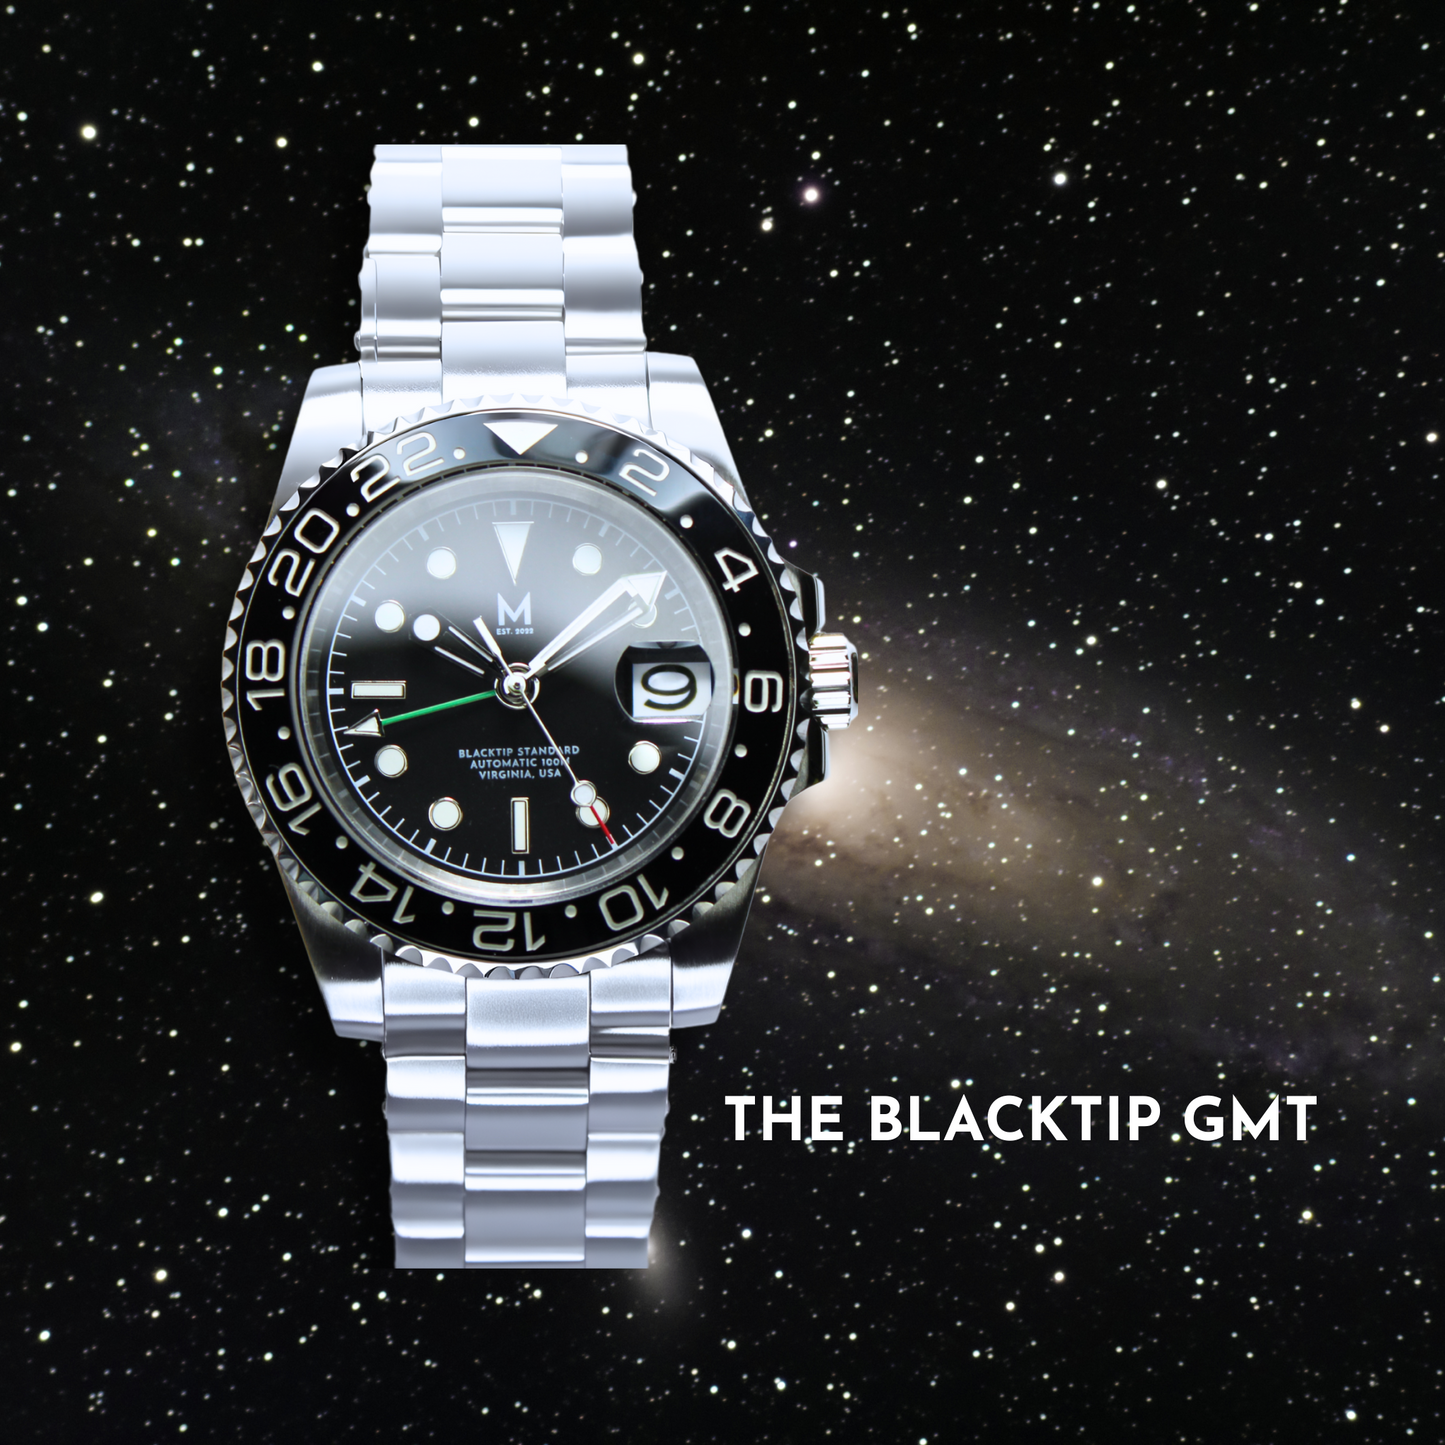 The Blacktip GMT